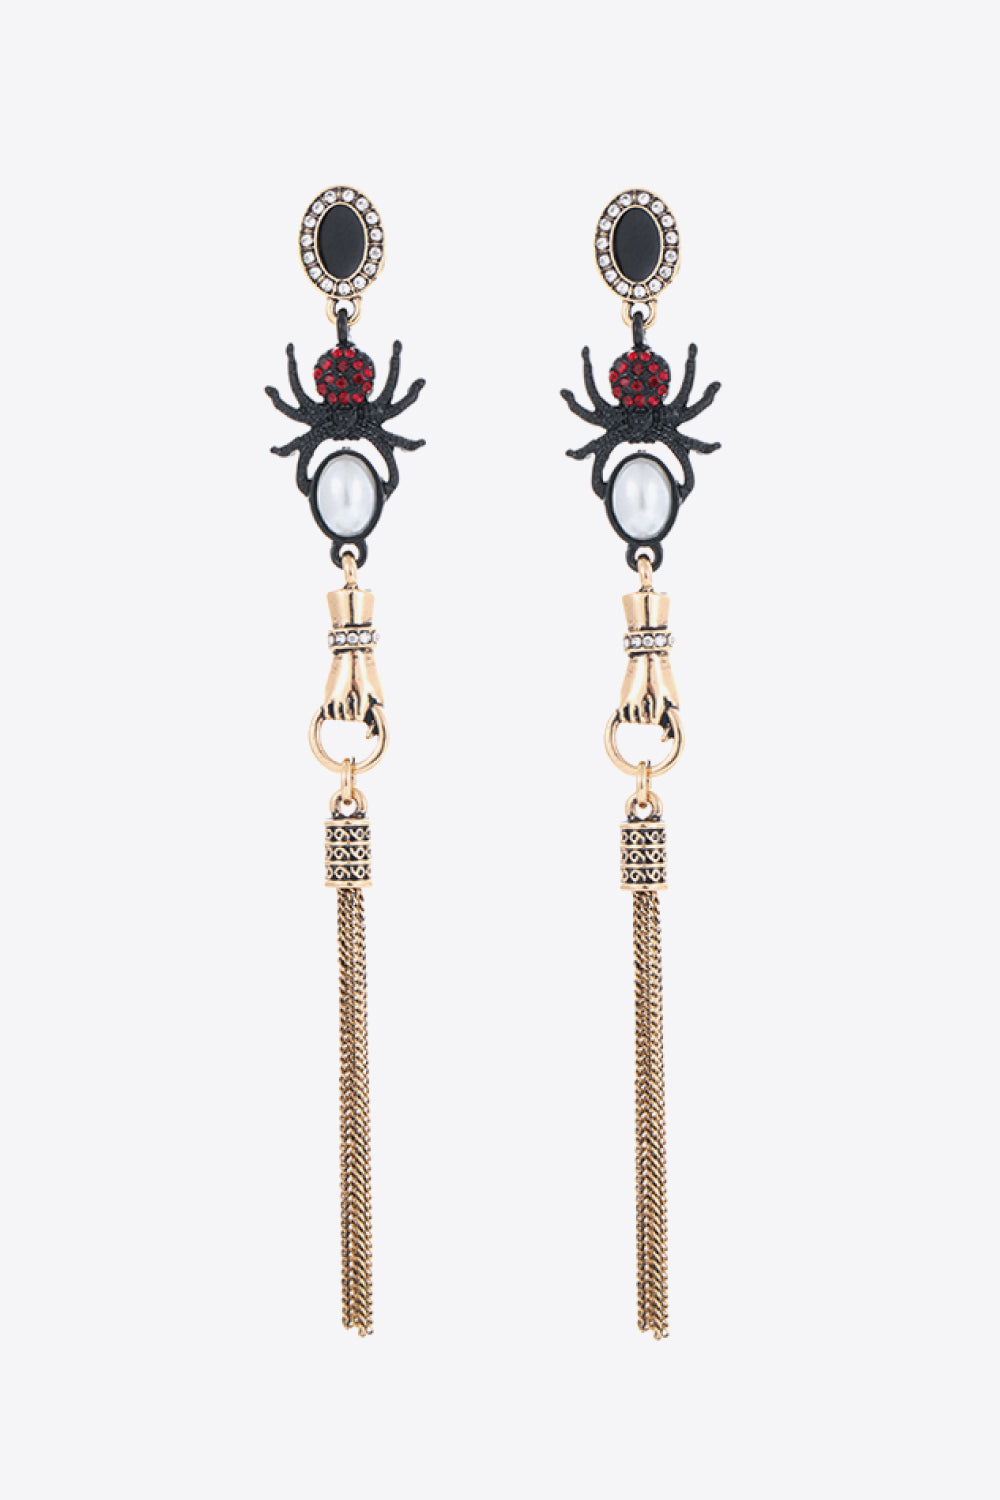 18K Gold-Plated Spider Drop Earrings - Earrings - FITGGINS